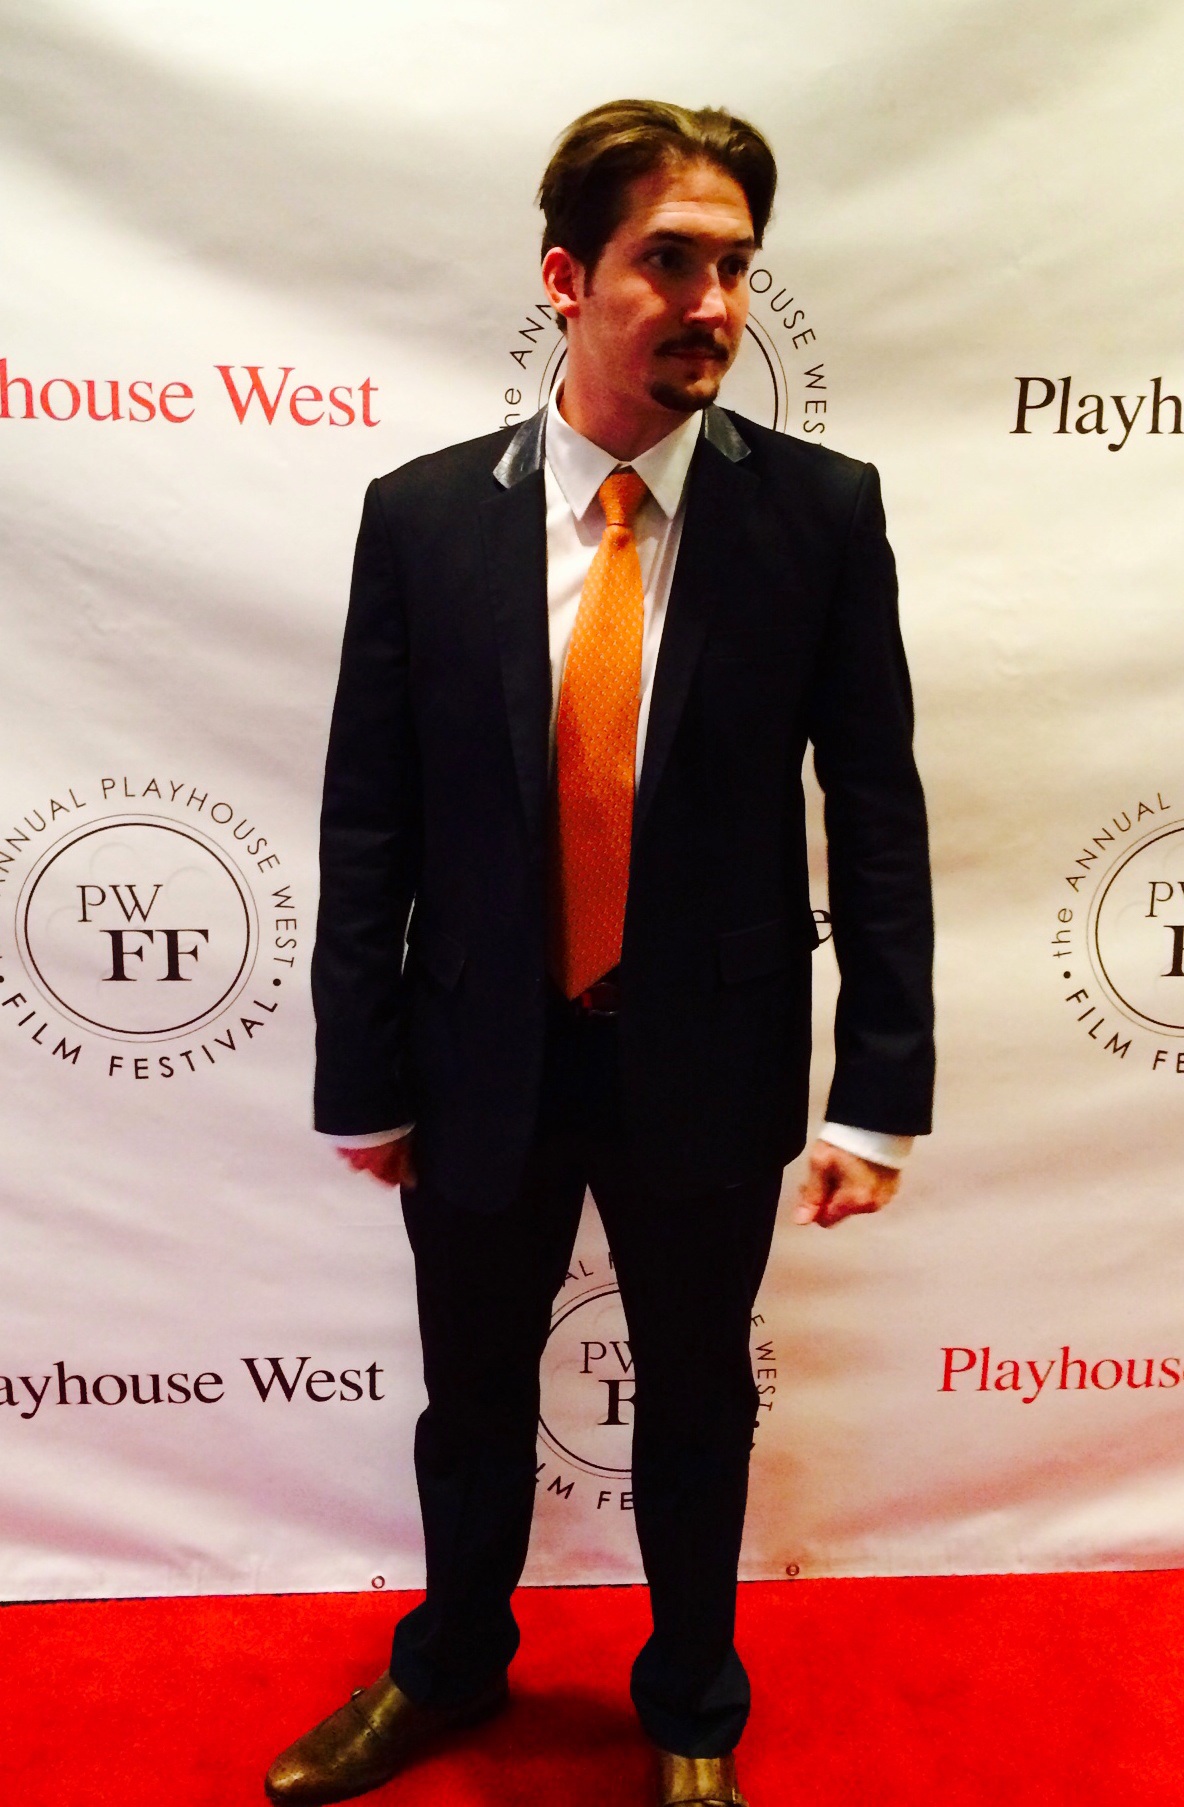 Playhouse West 18th Annual Film Festival.